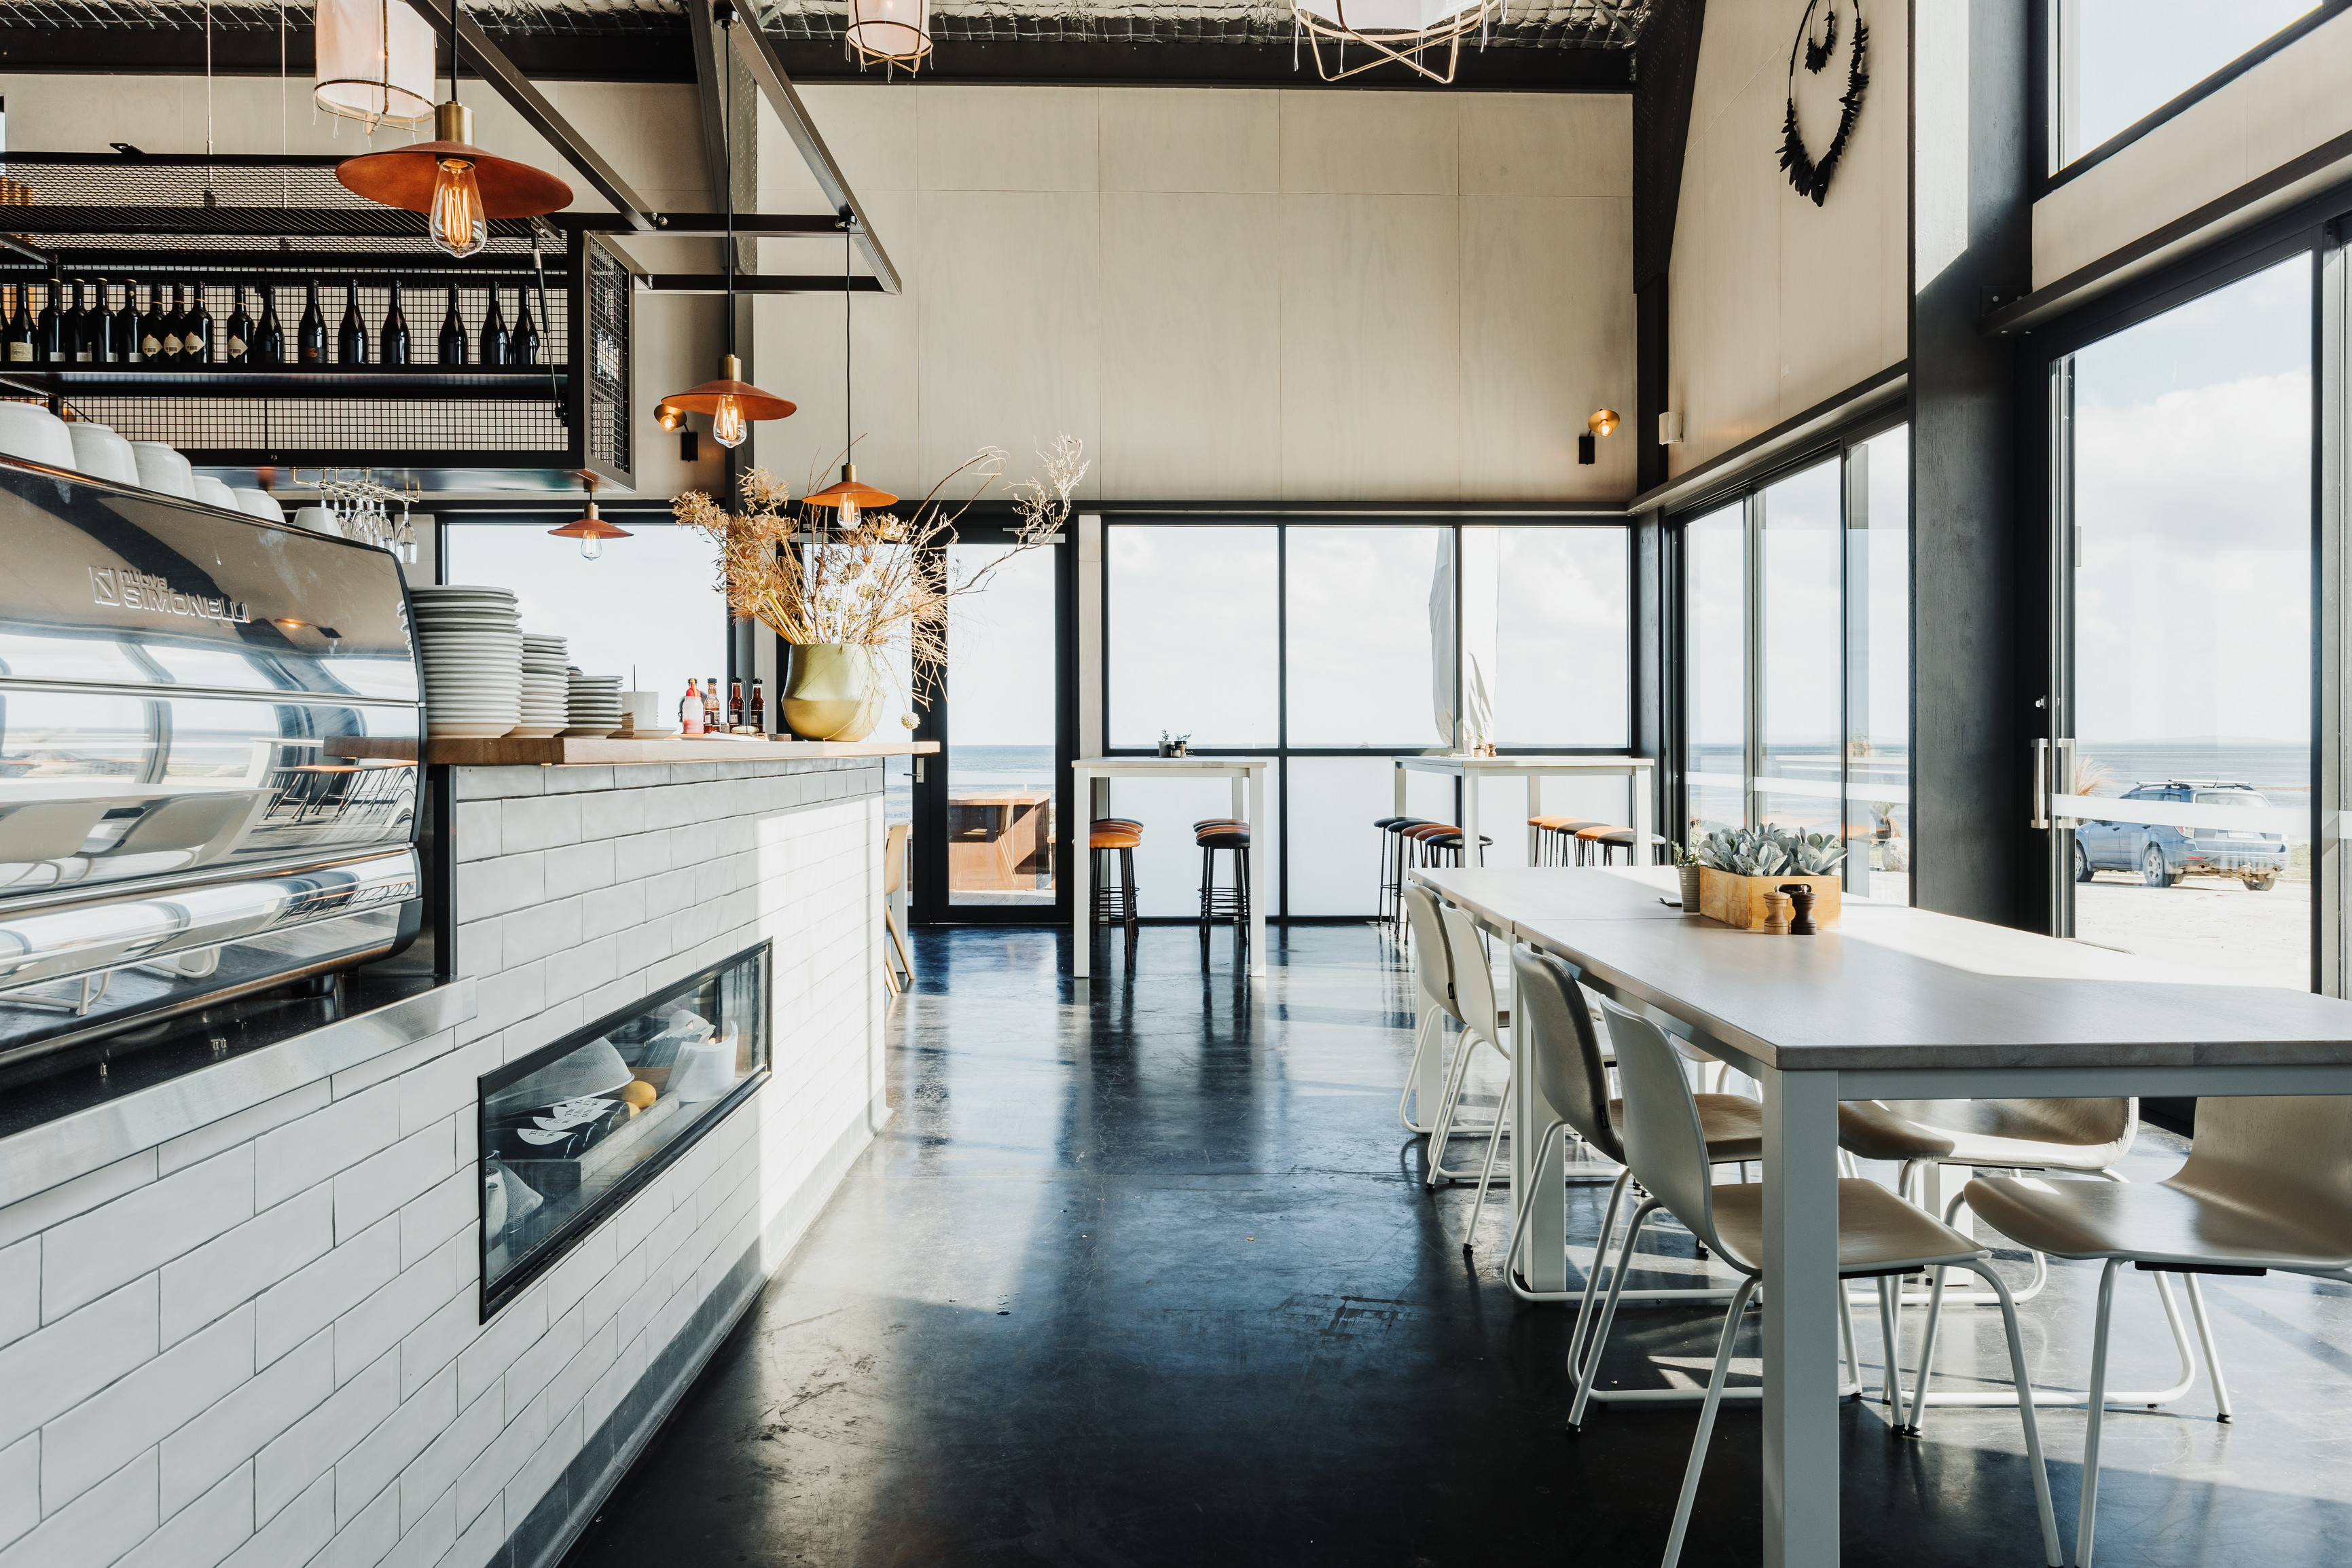 "Stunning image of inside The Flinders Wharf, a licensed cafe/restaurant. "